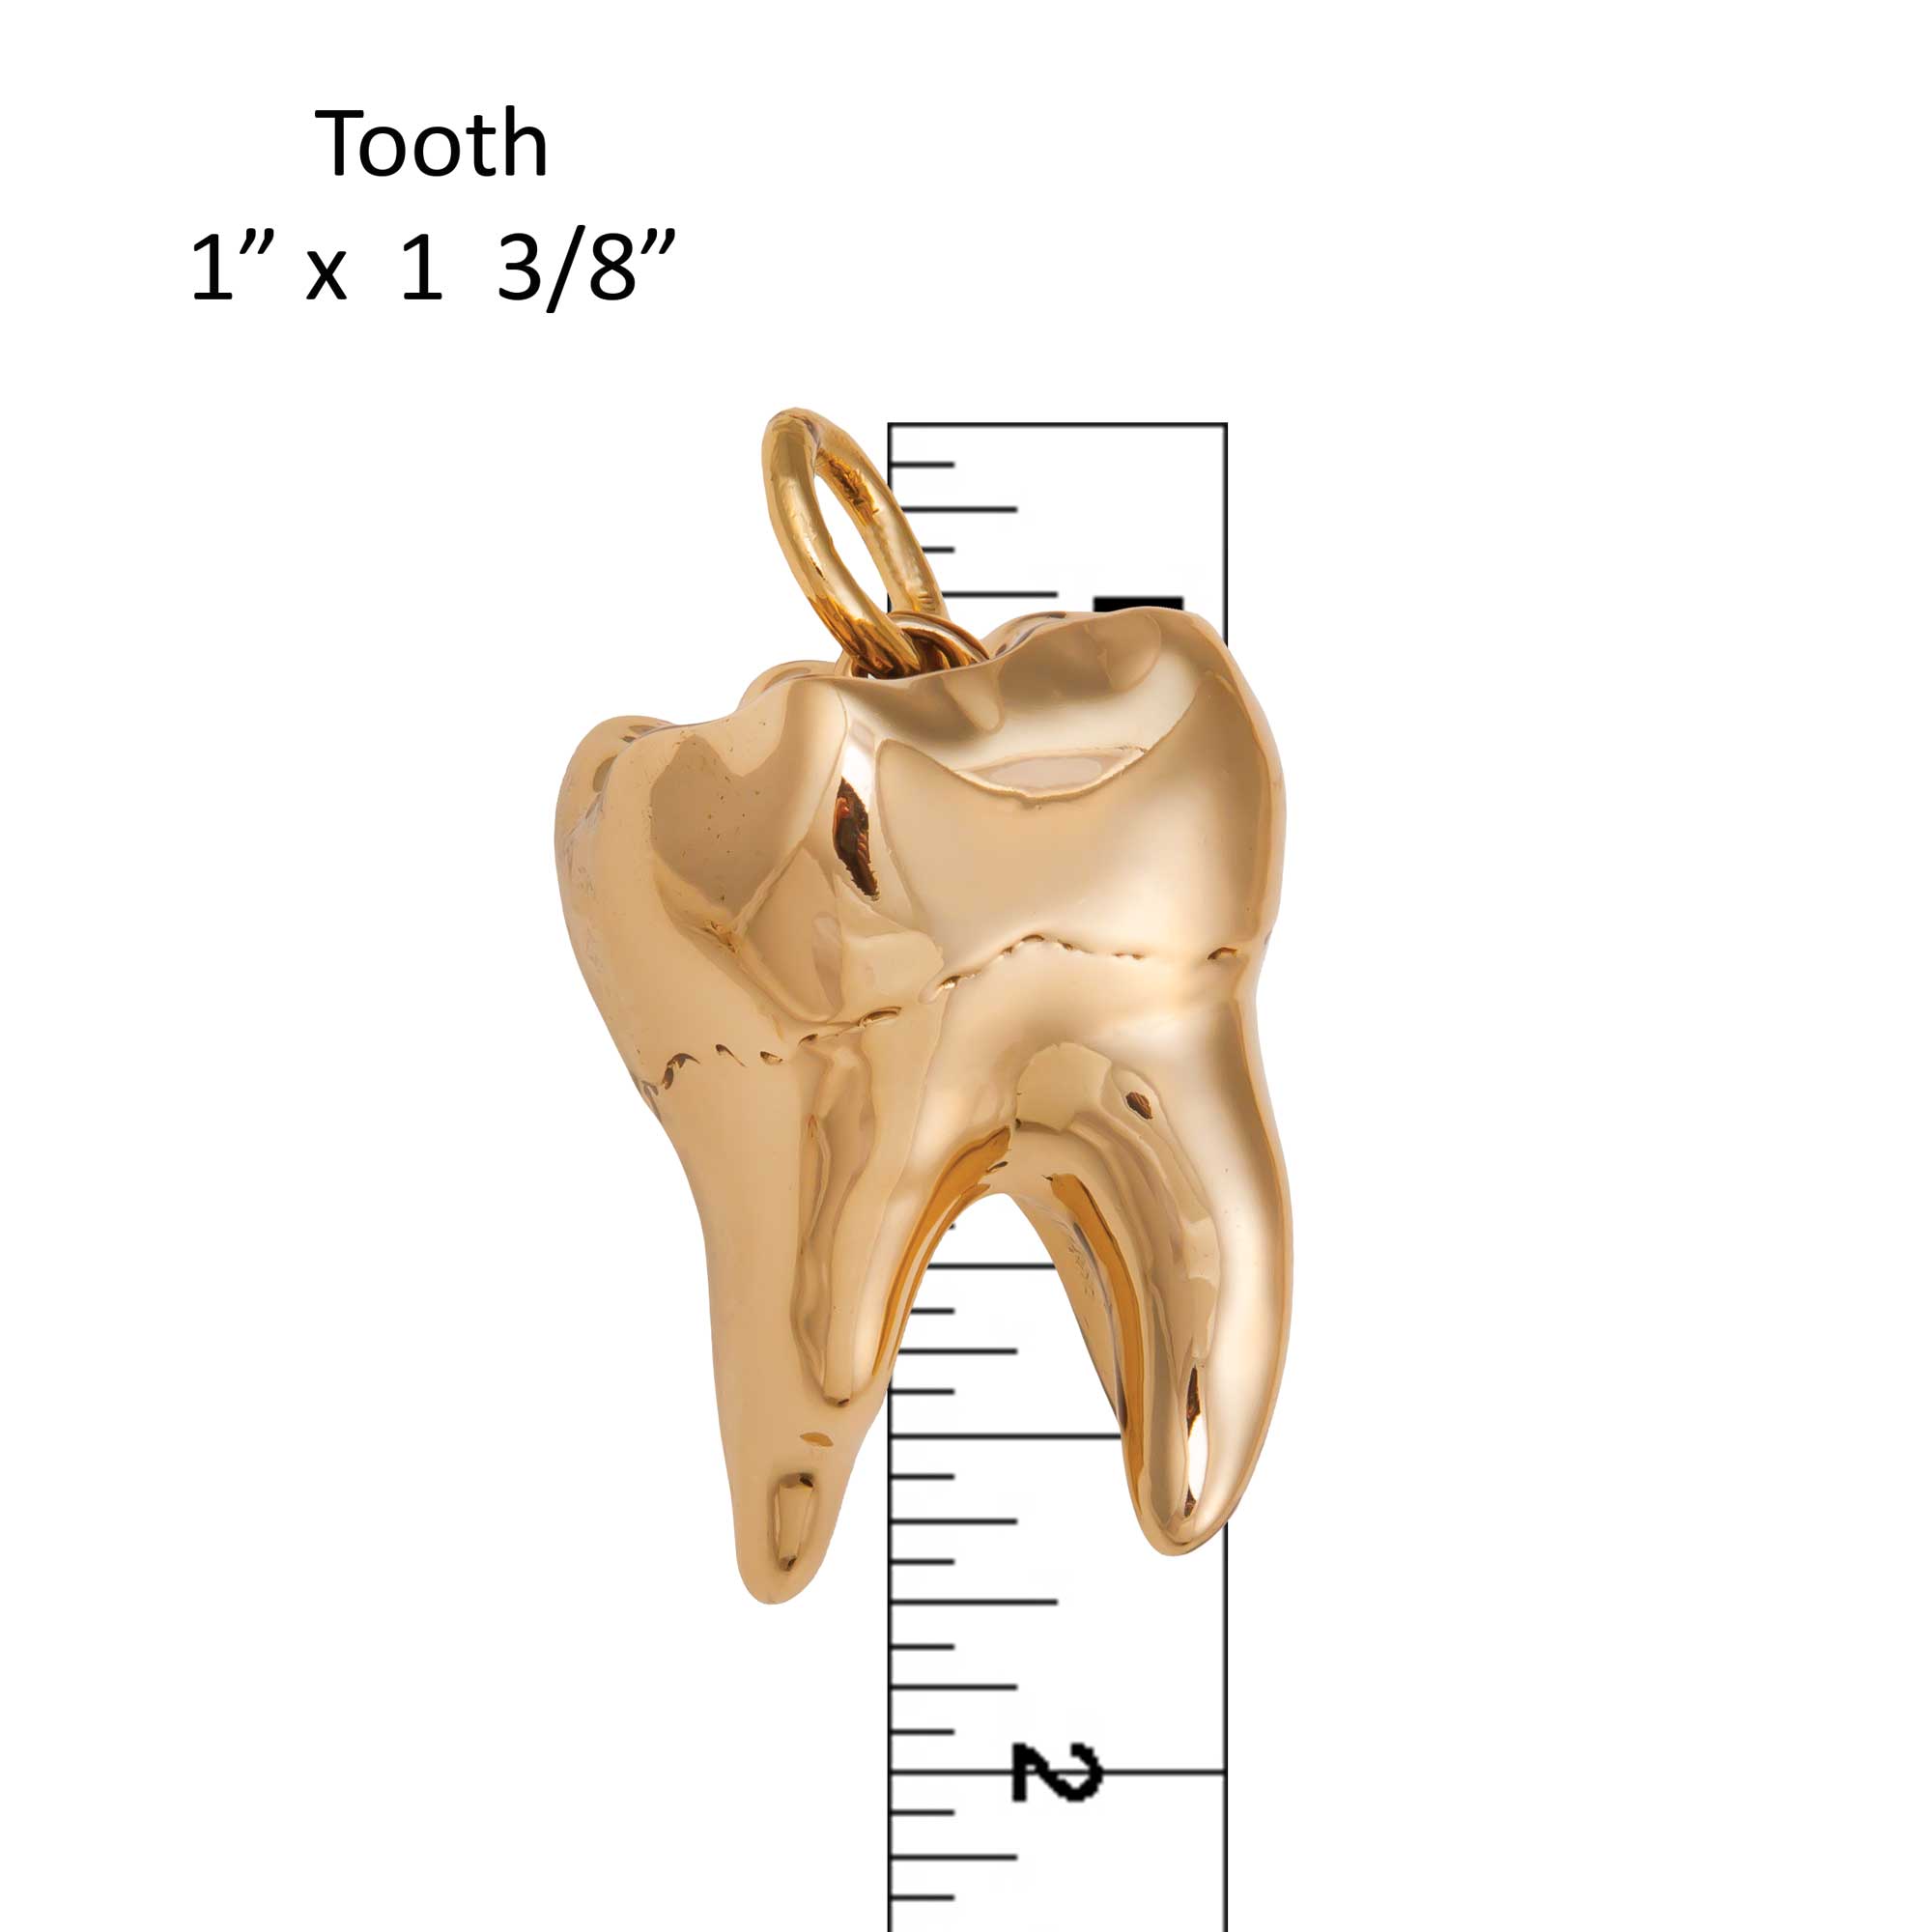 Alchemia Large Tooth Pendant | Charles Albert Jewelry